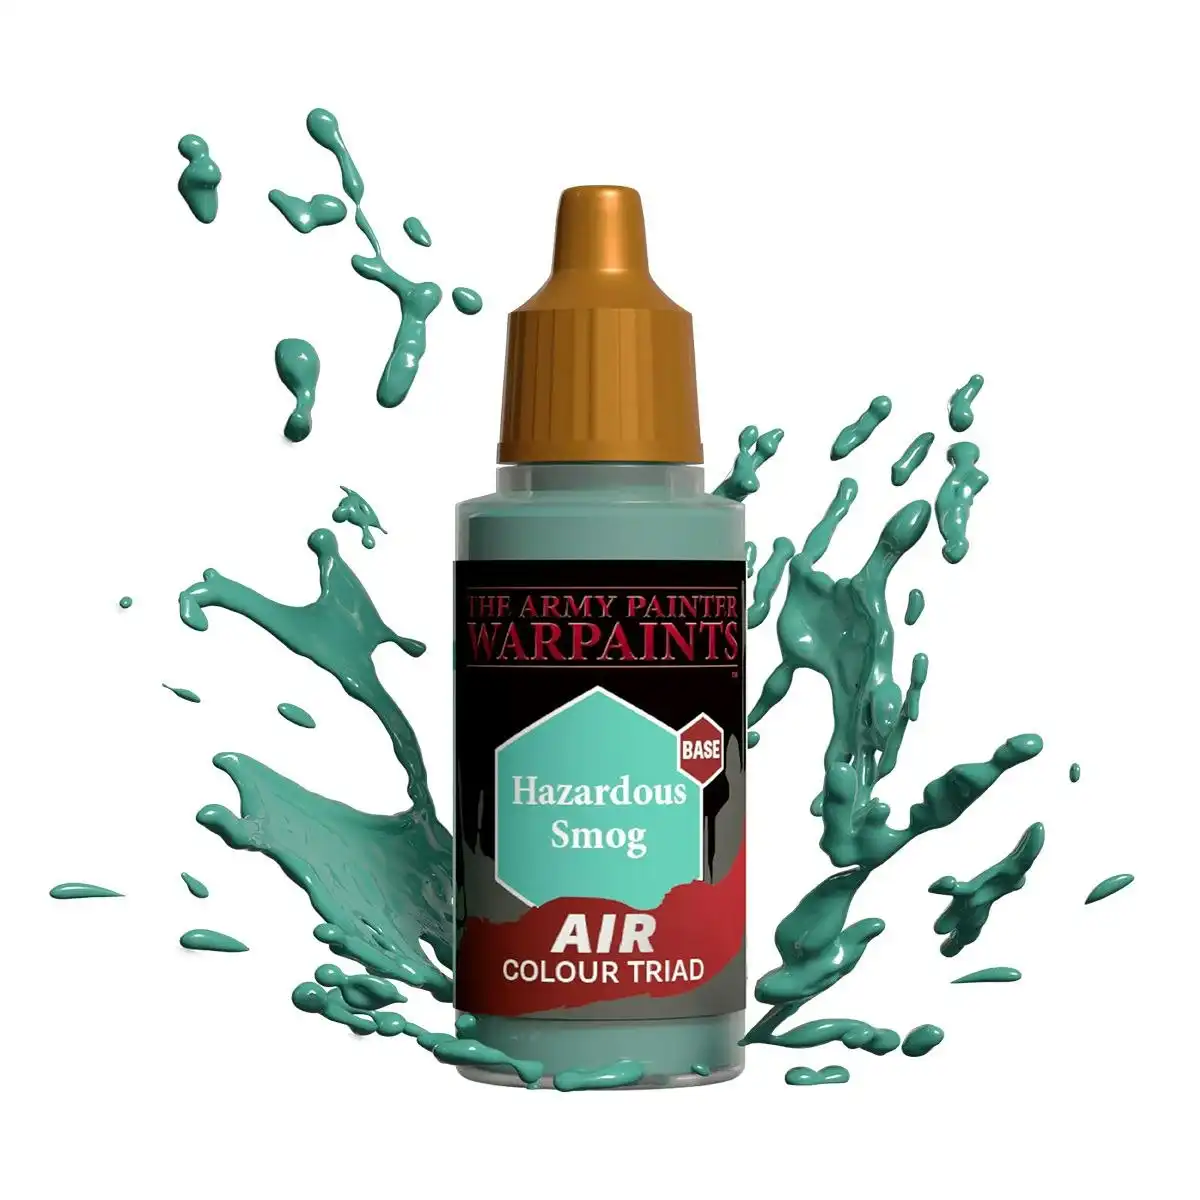 Army Painter Warpaints - Air Hazardous Smog Acrylic Paint 18ml